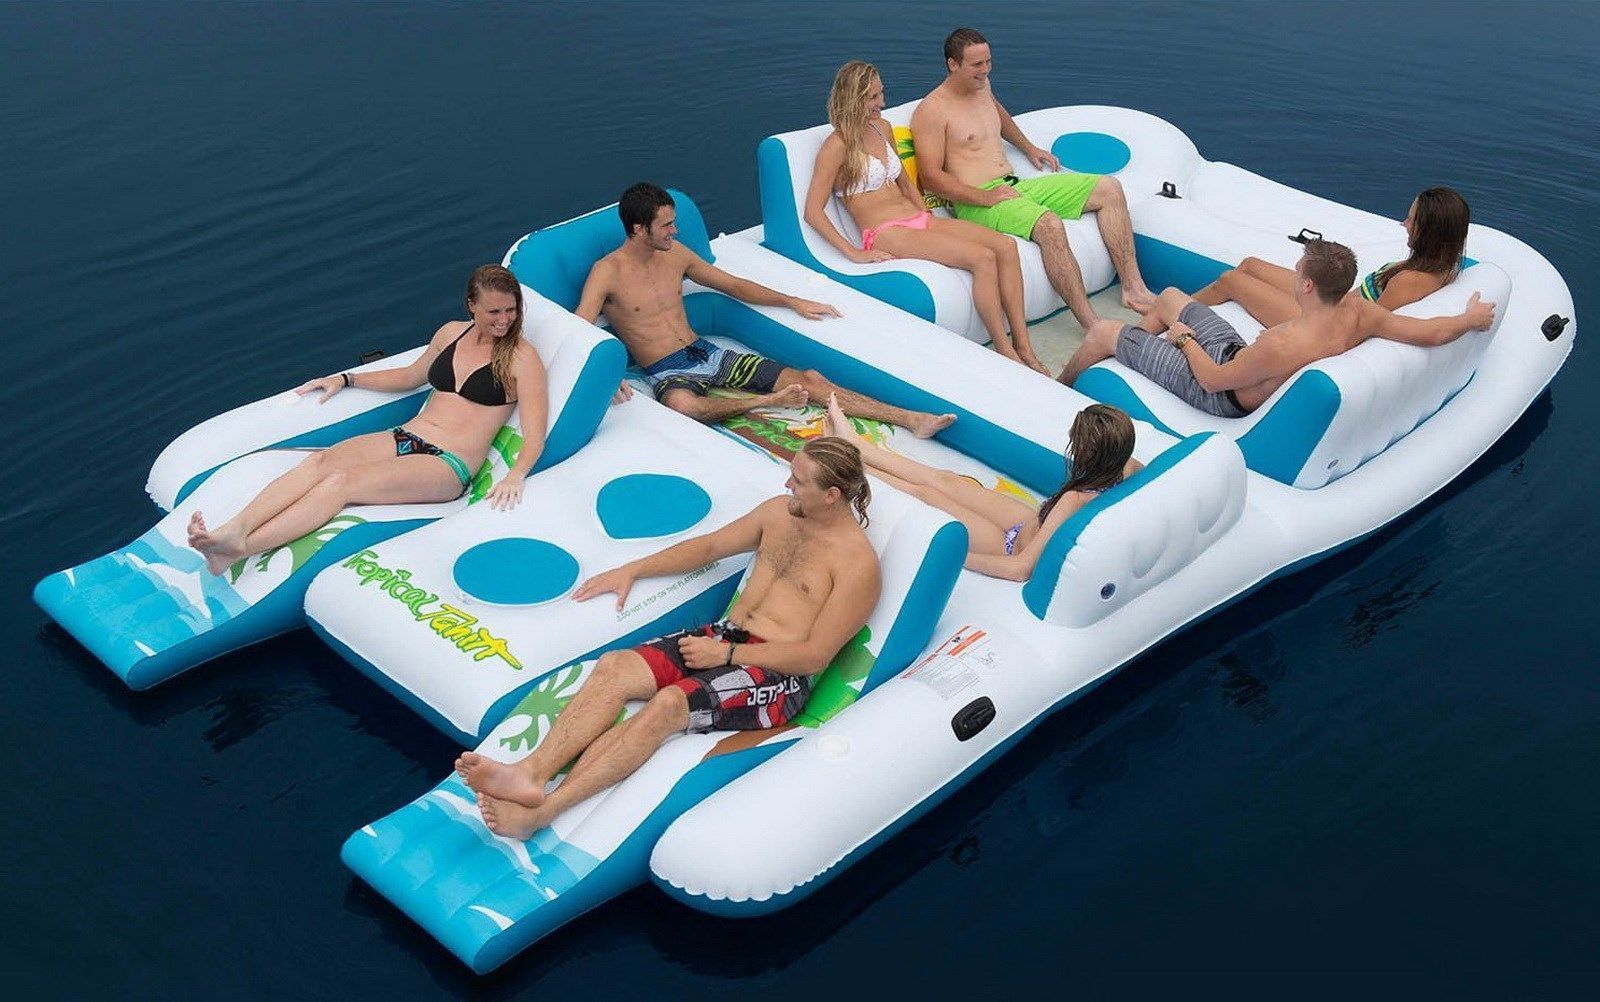 Надувной матрас Tropical Tahiti giant 6 person Inflatable Raft Pool Lake Ocean Floating Island